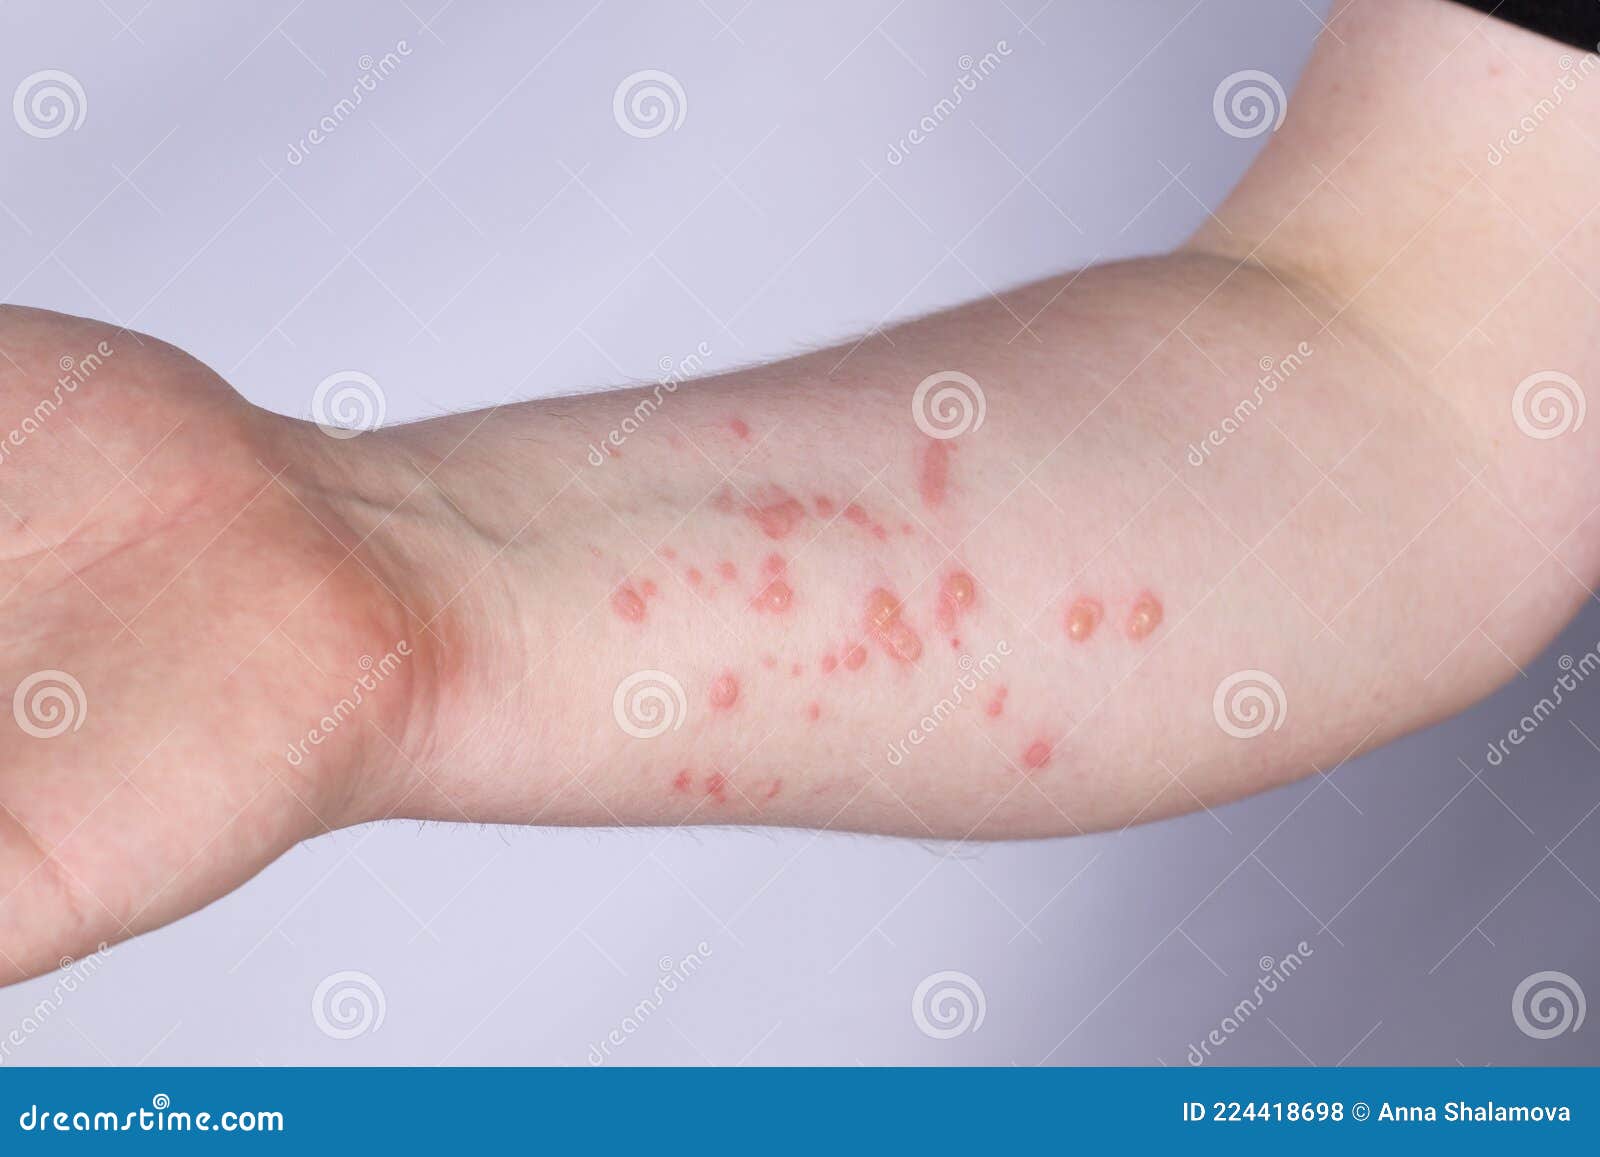 large rash on the guy's hand. monkeypox virus